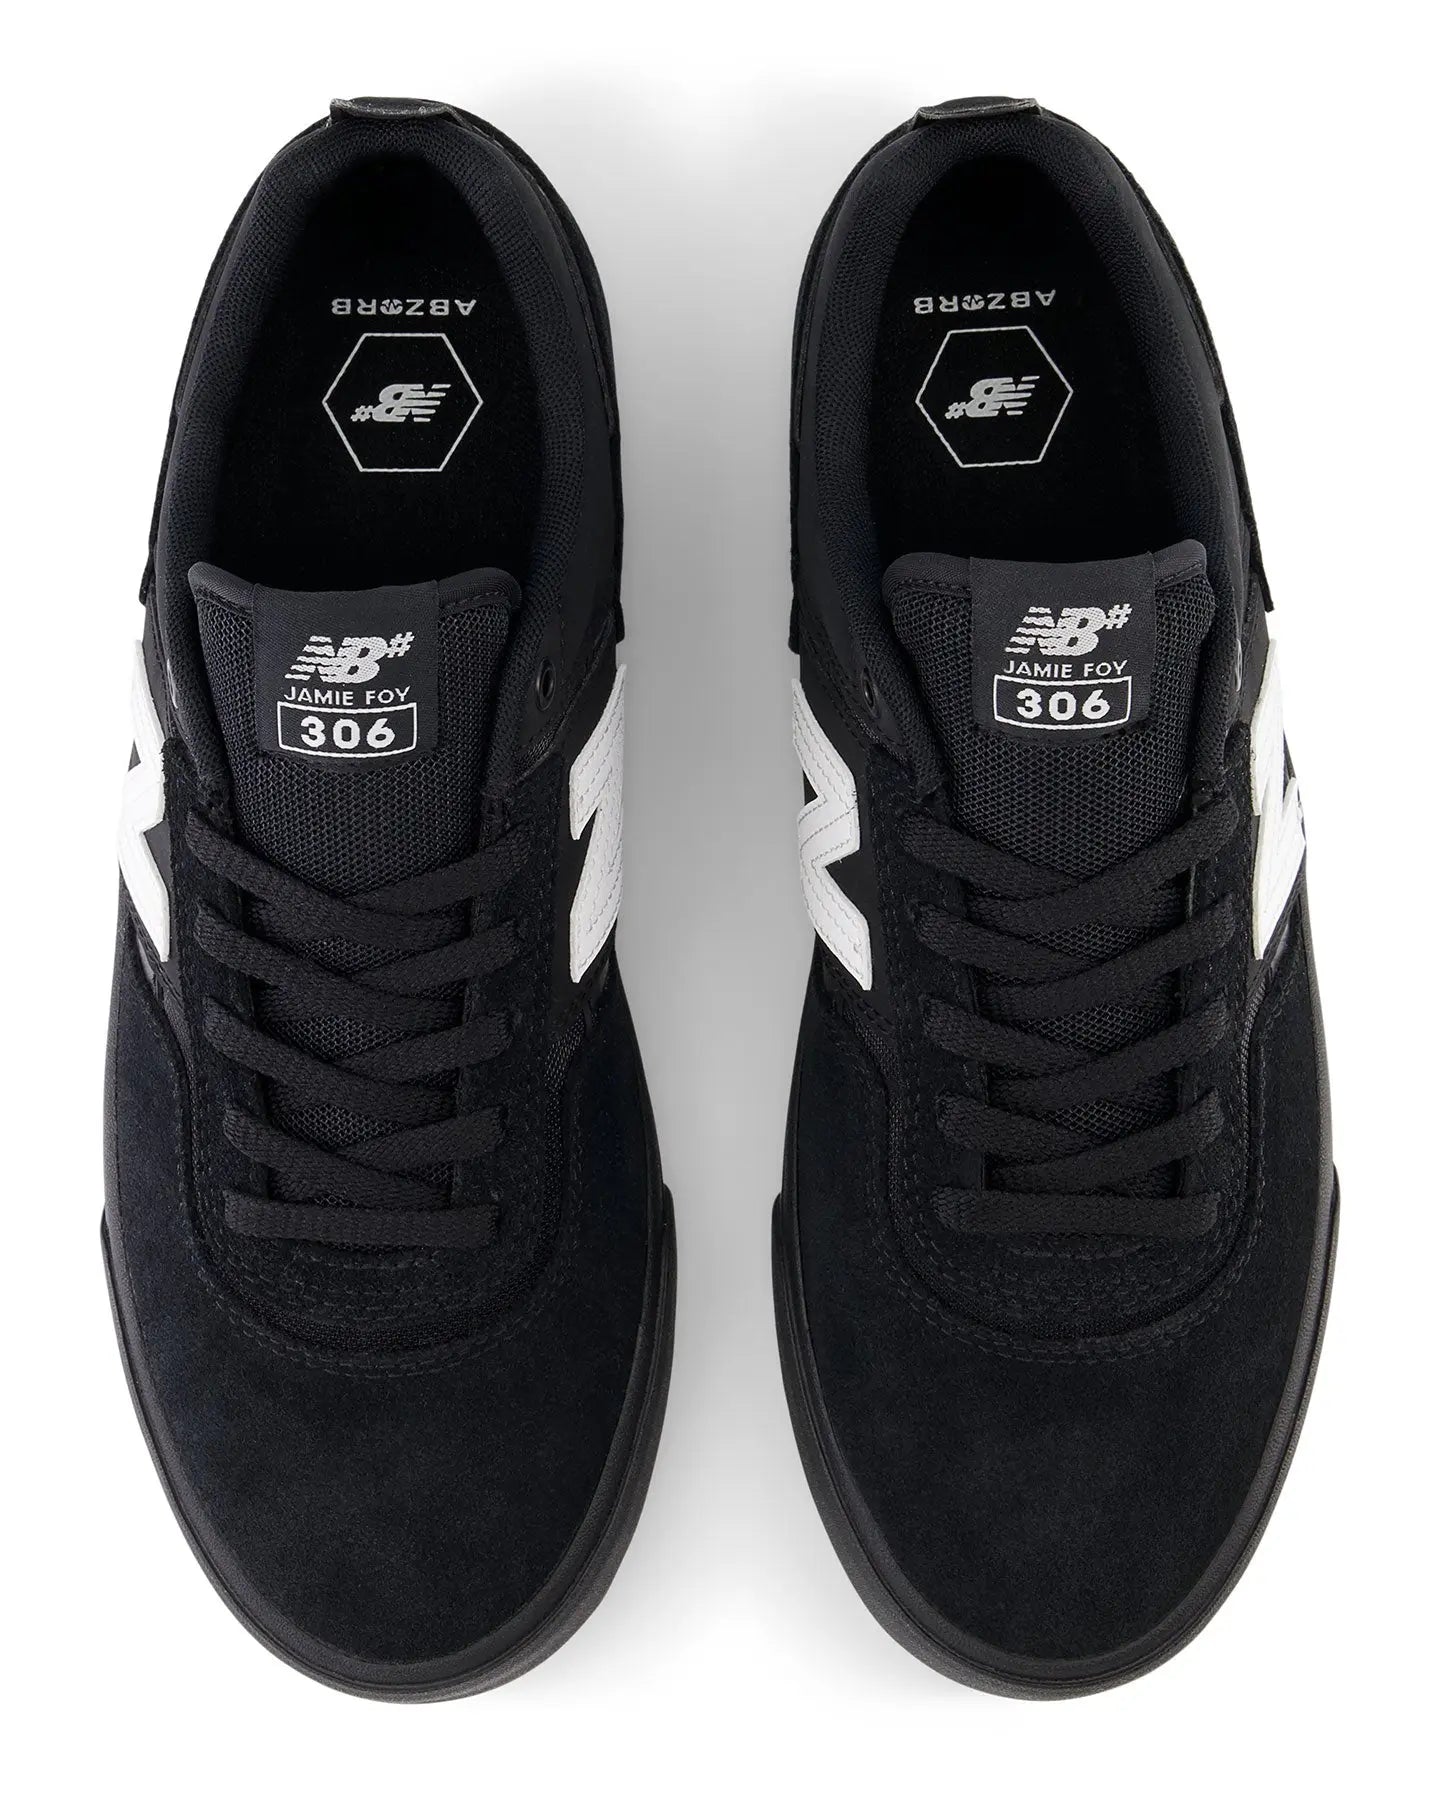 New Balance 306 - Black / Black Footwear